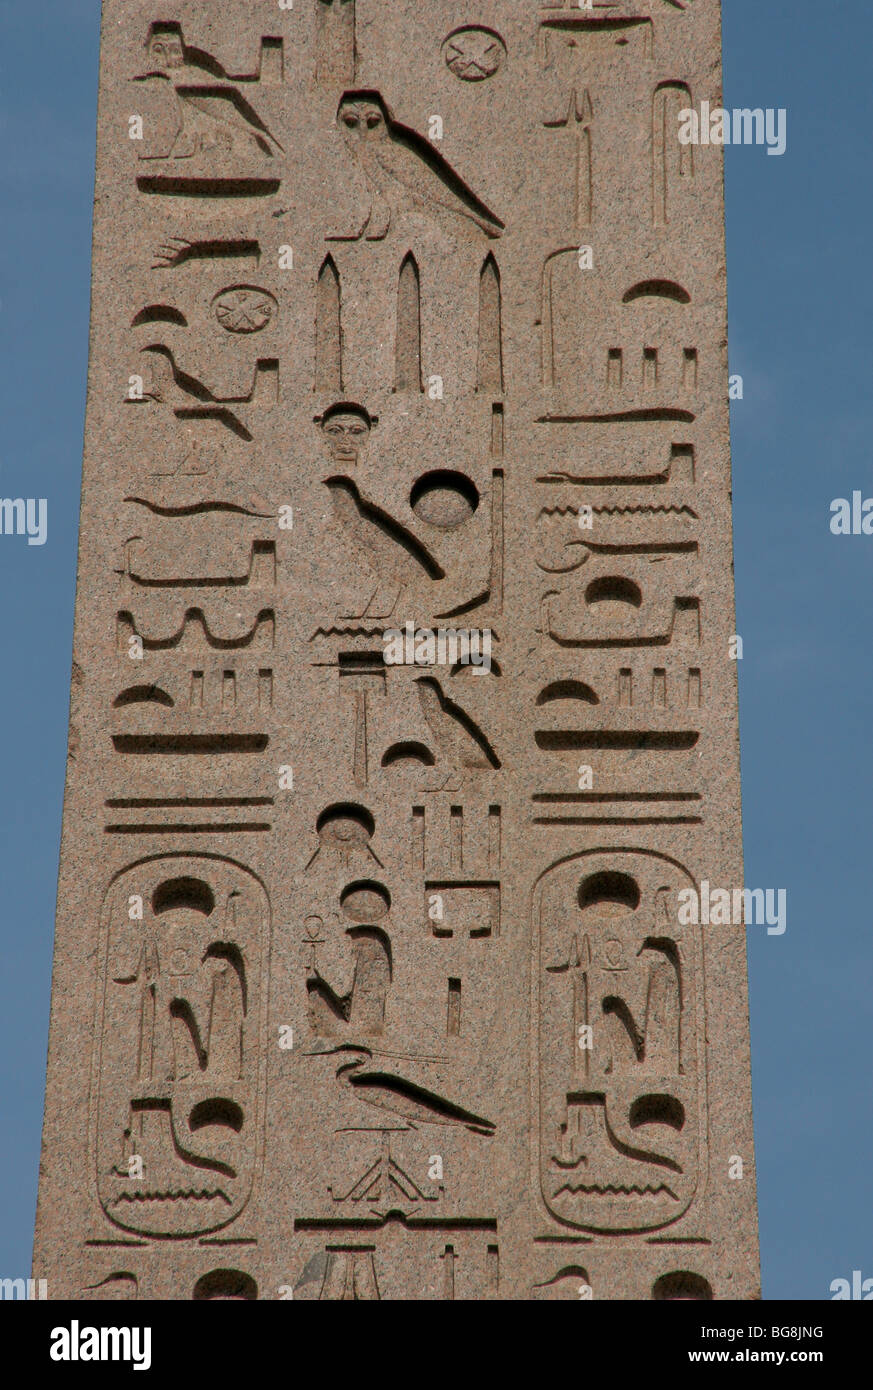 Ägyptischer Obelisk Ramses II von Heliopolis. Piazza del Popolo. Rom. Italien. Stockfoto